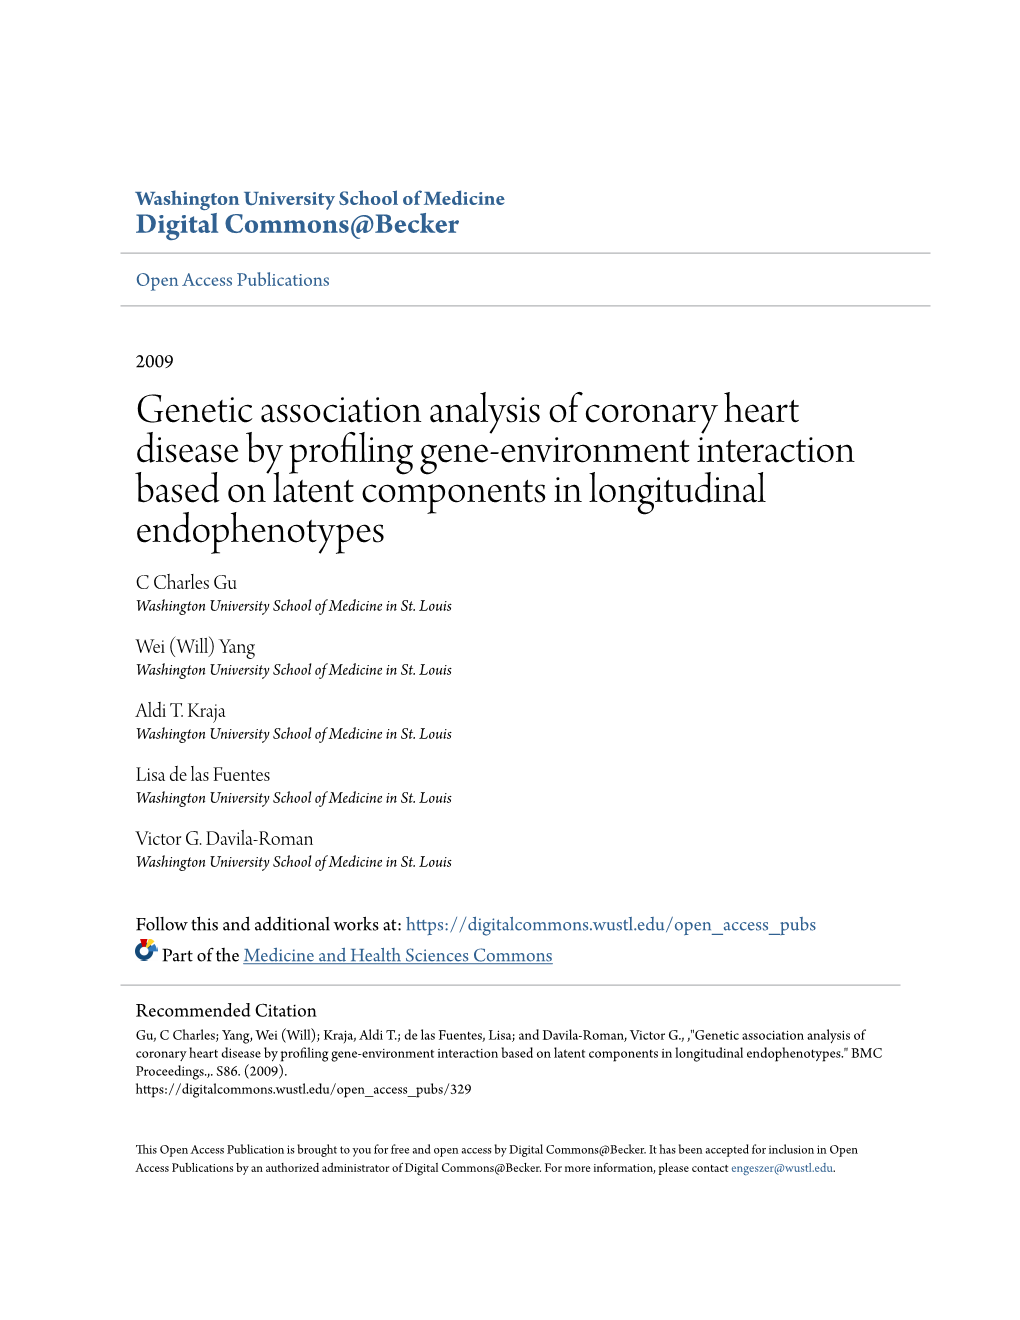 Genetic Association Analysis of Coronary Heart Disease by Profiling